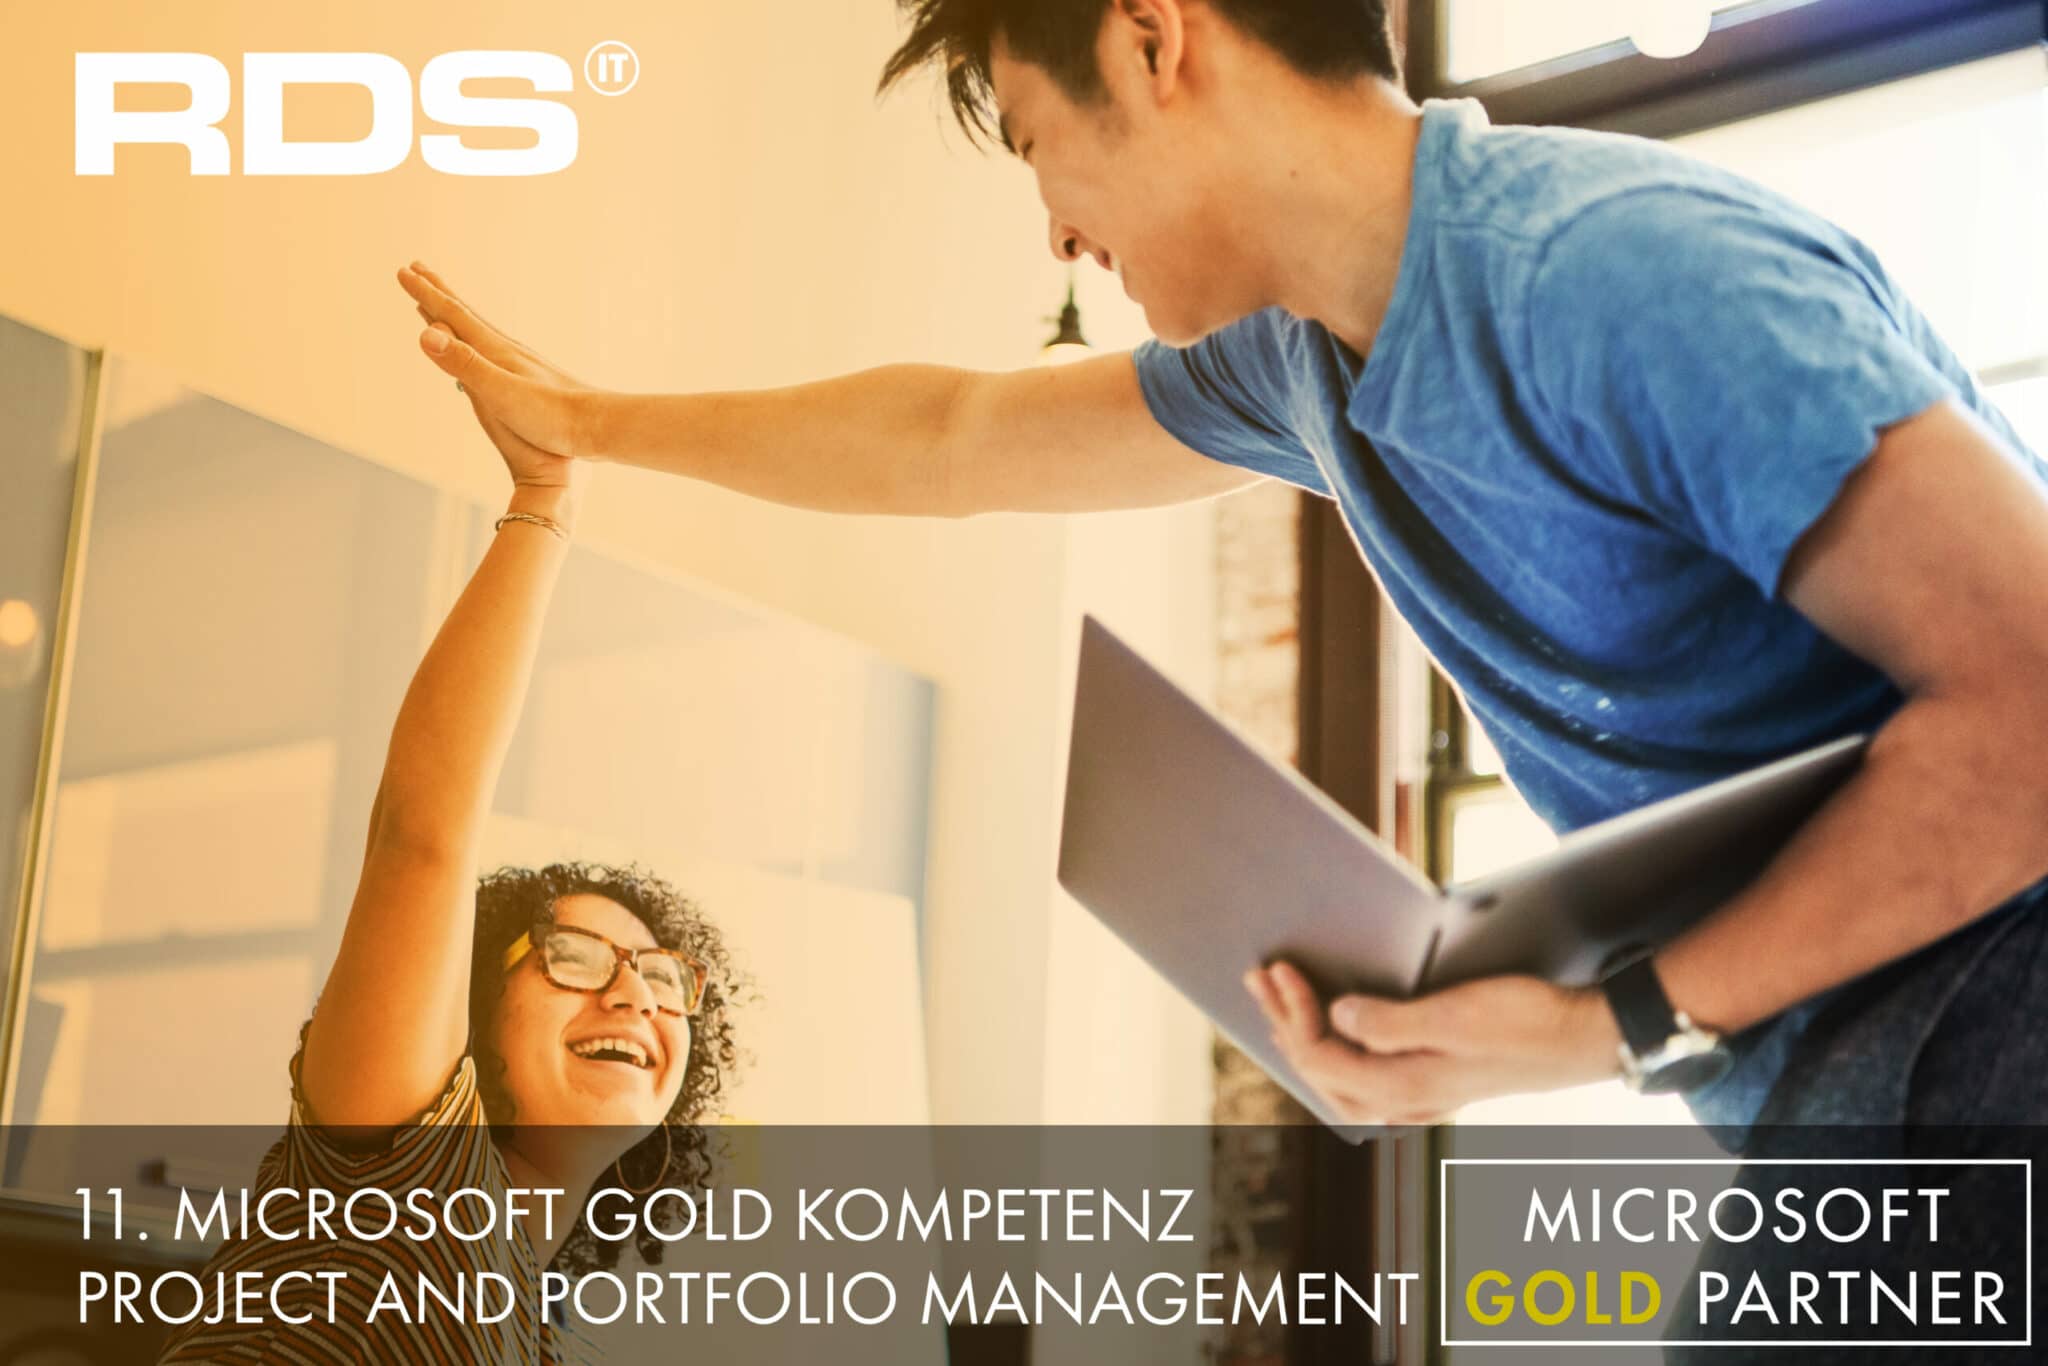 Microsoft Gold Partner – 11. Microsoft Gold Kompetenz